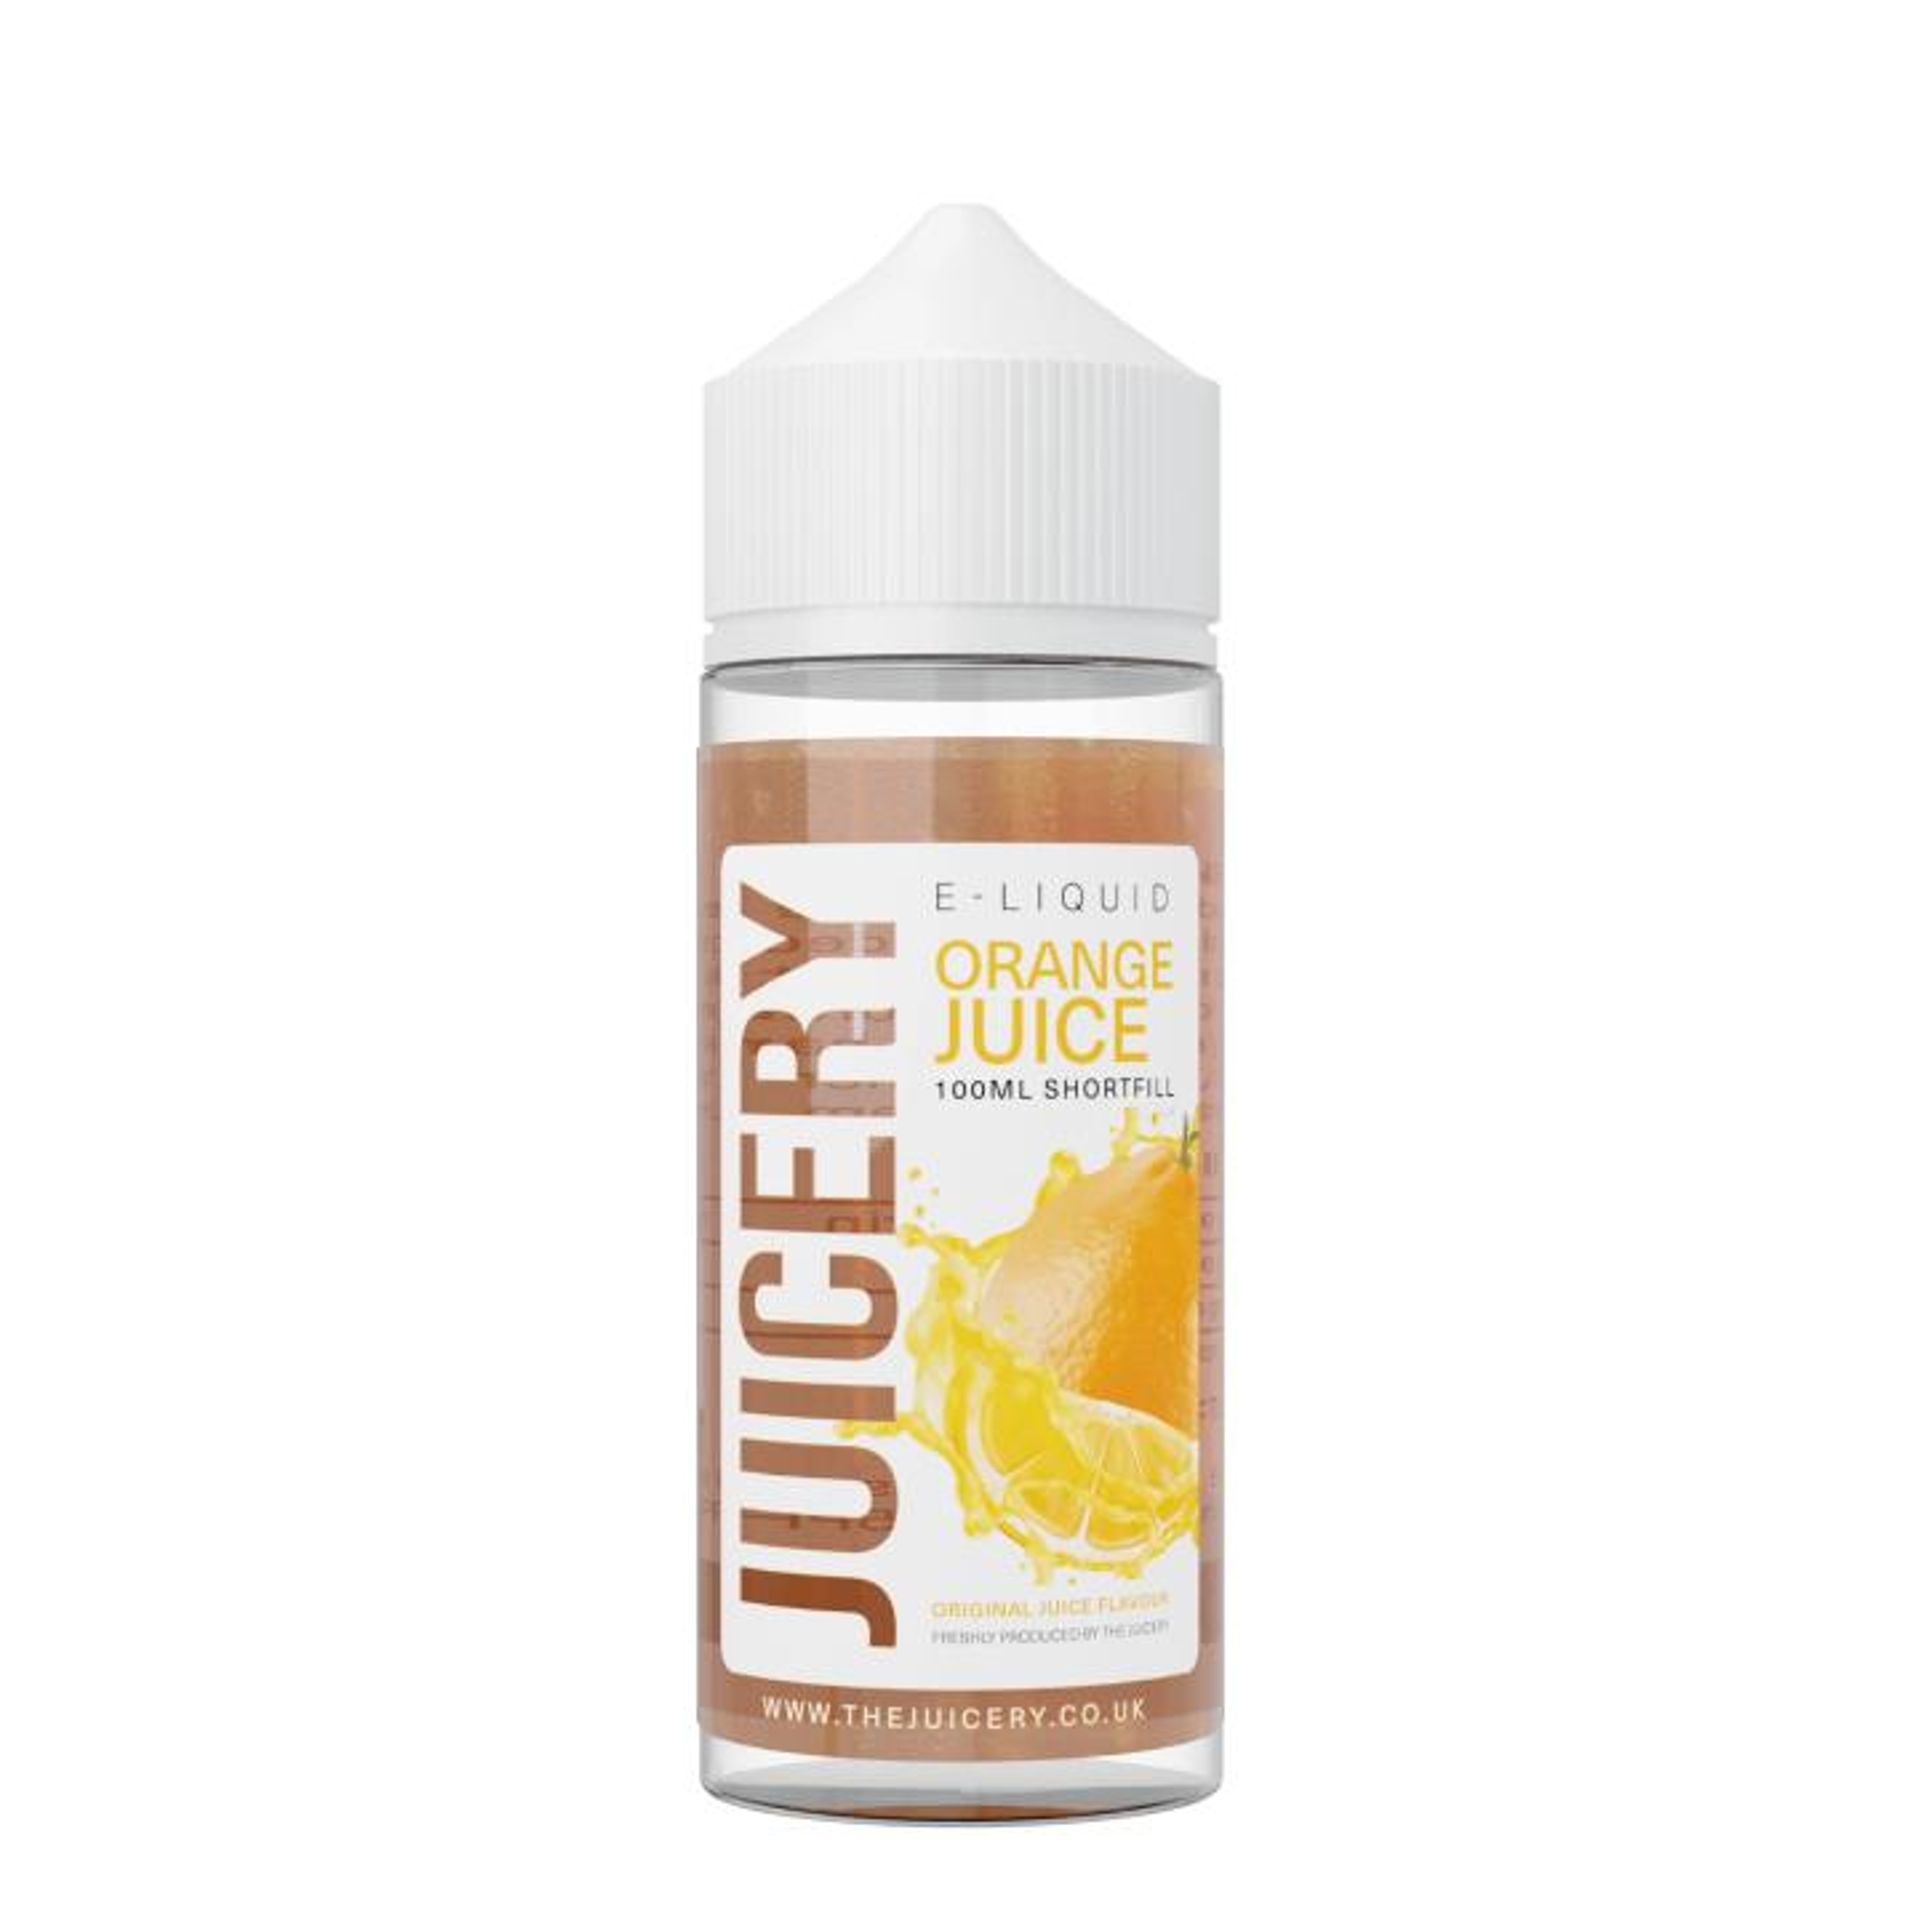 Image of Orange Juice by The Juicery